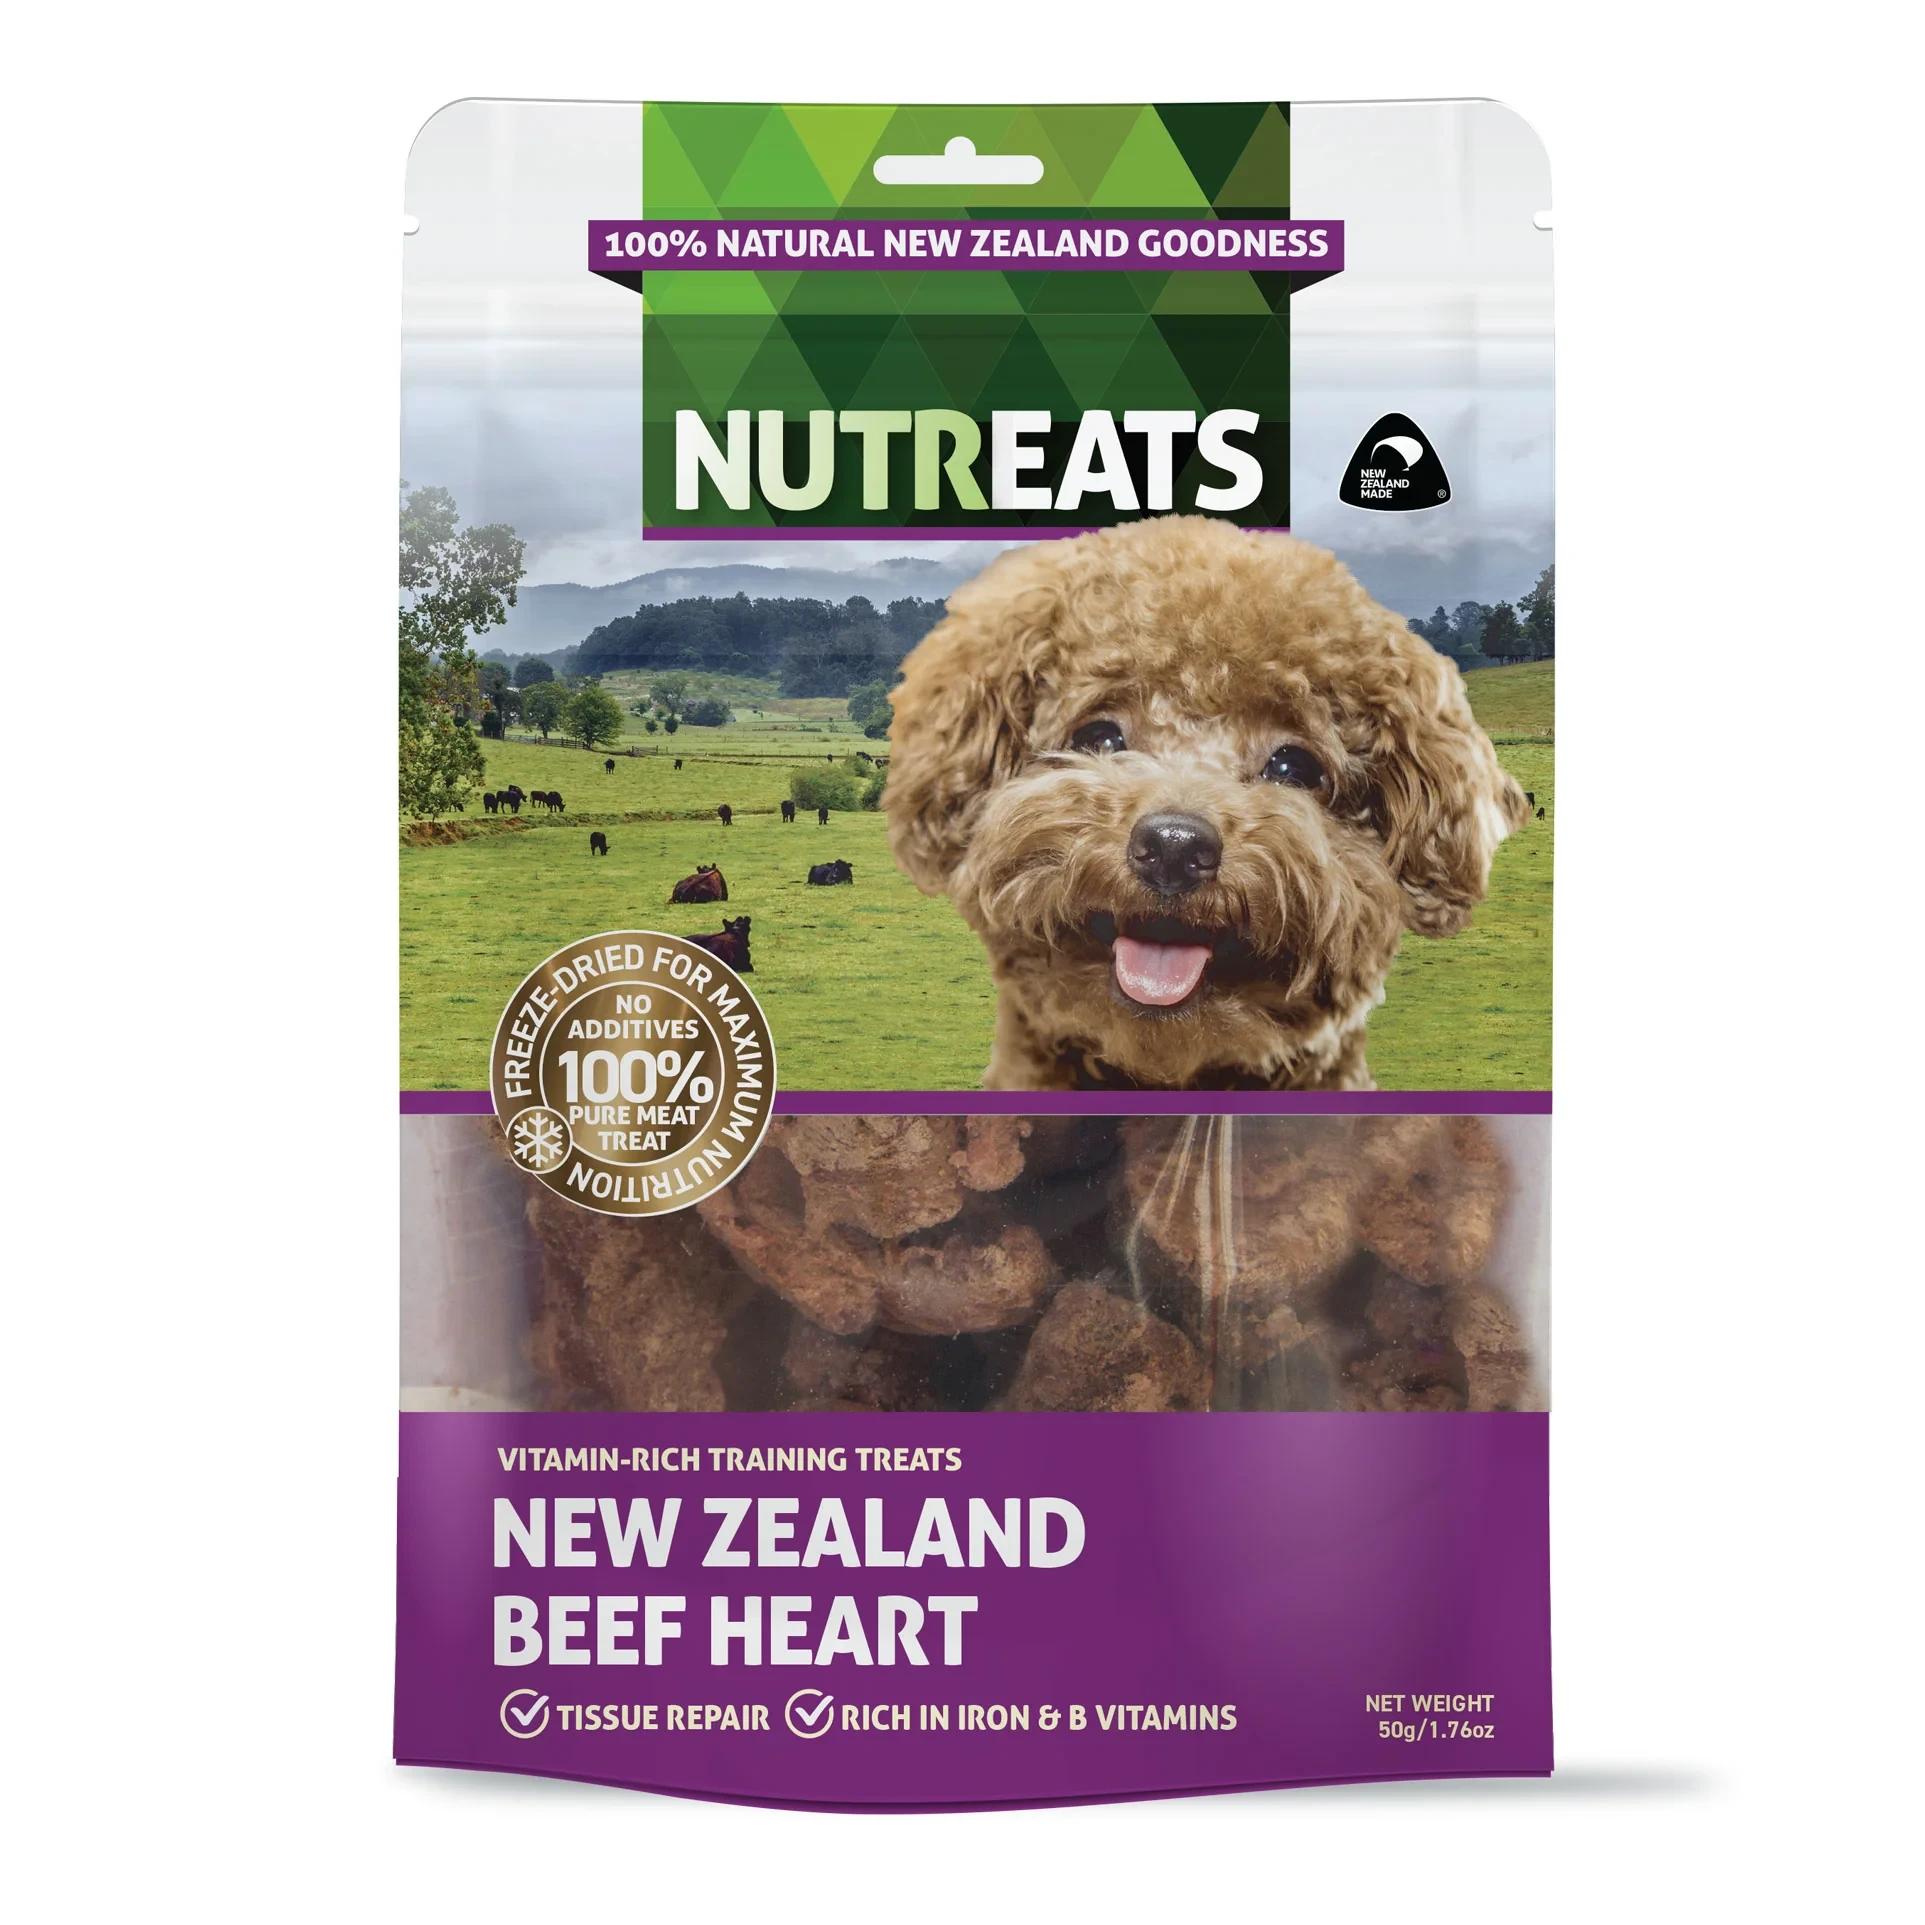 New Zealand Prime Beef Heart dog treats